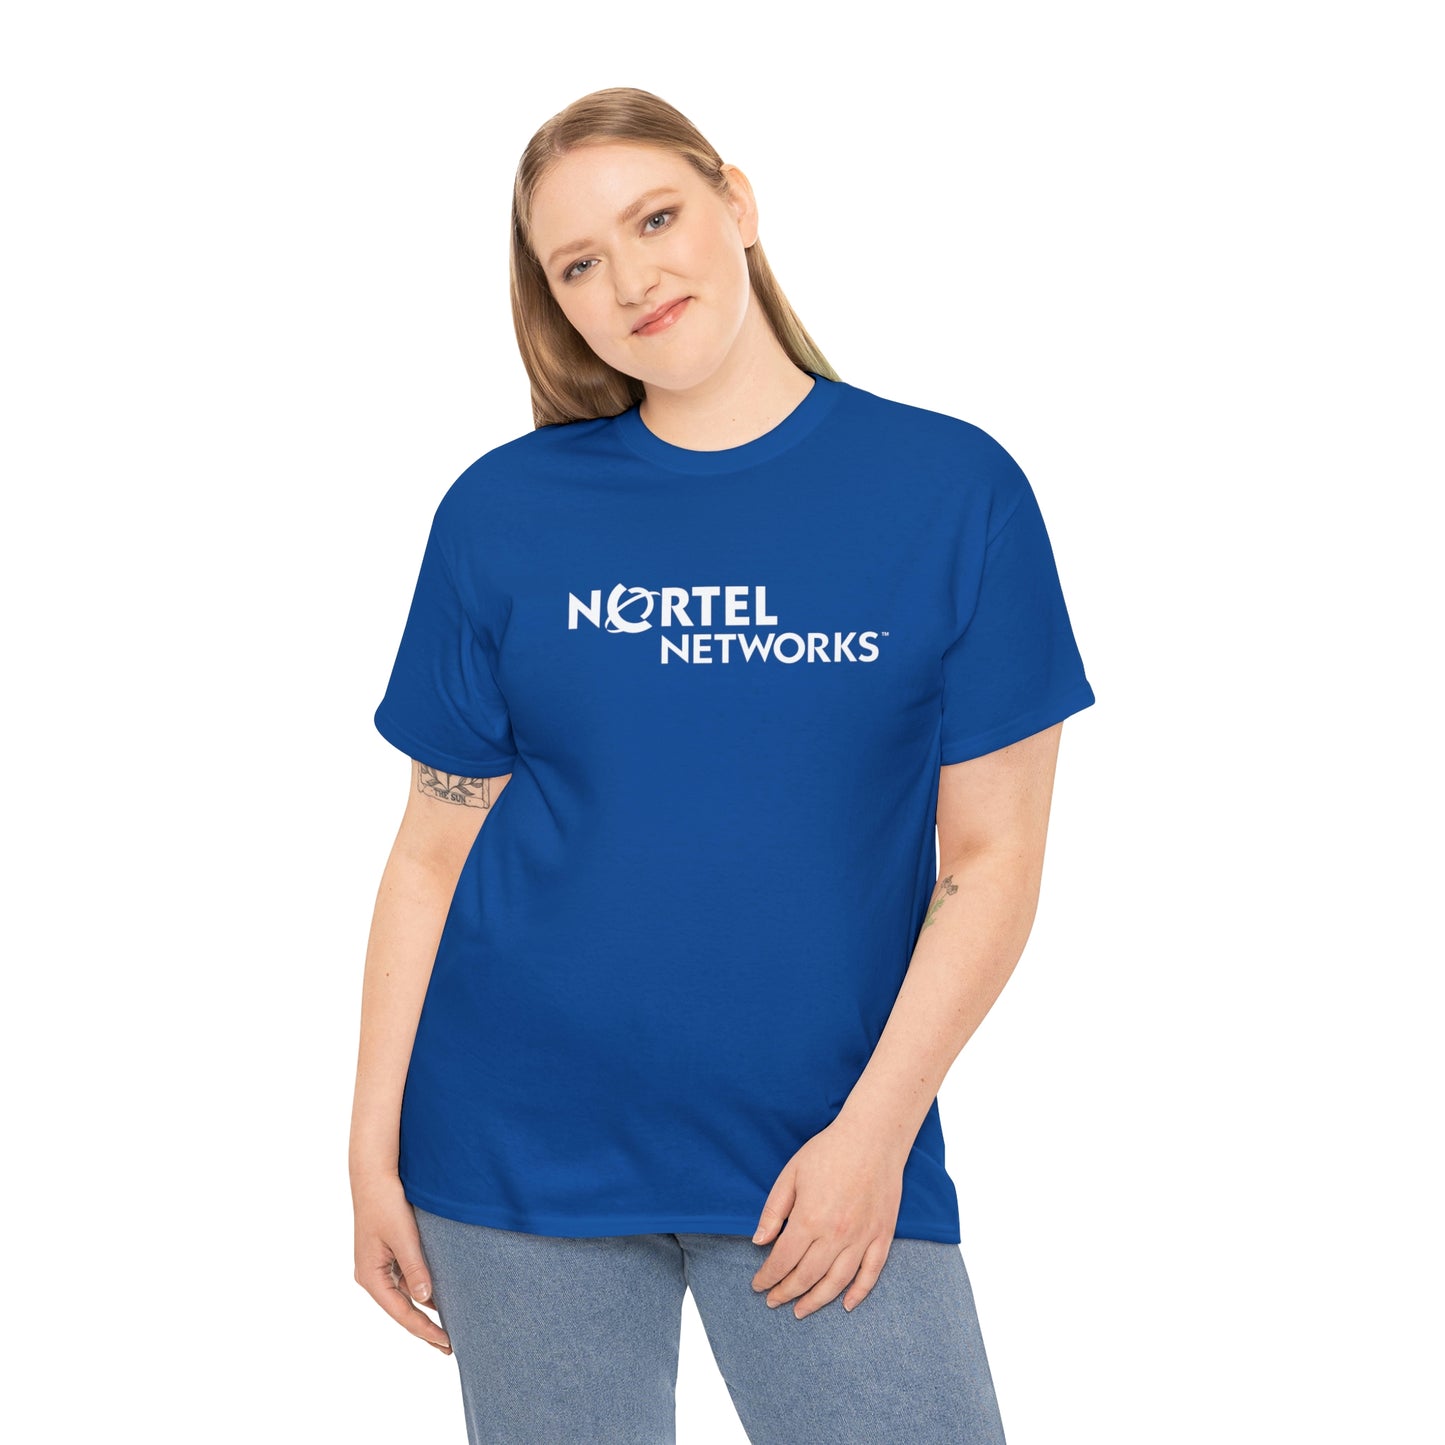 Nortel Networks T-Shirt